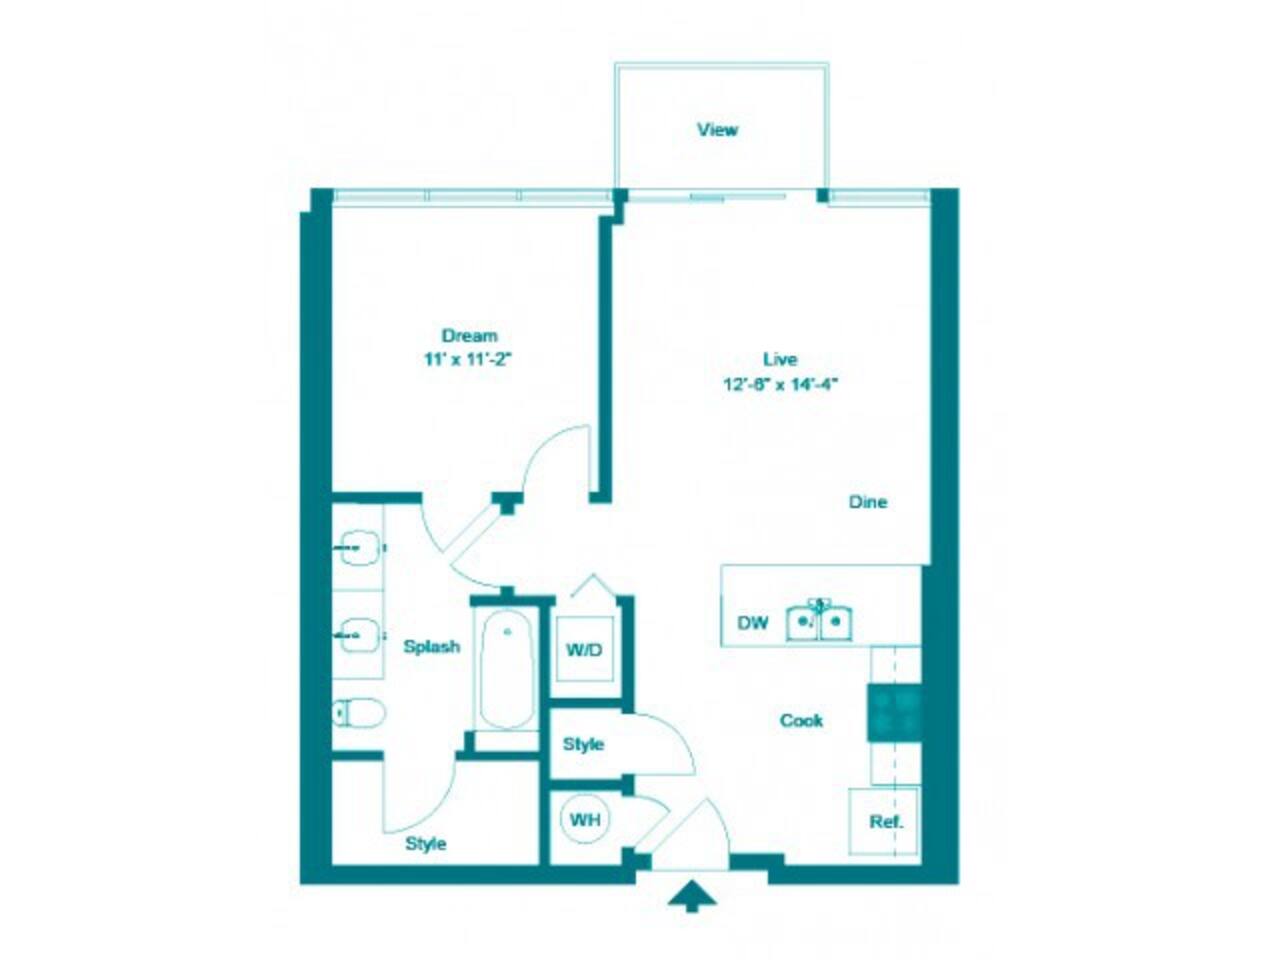 Floorplan diagram for One Bedroom One Bath (677 SF), showing 1 bedroom